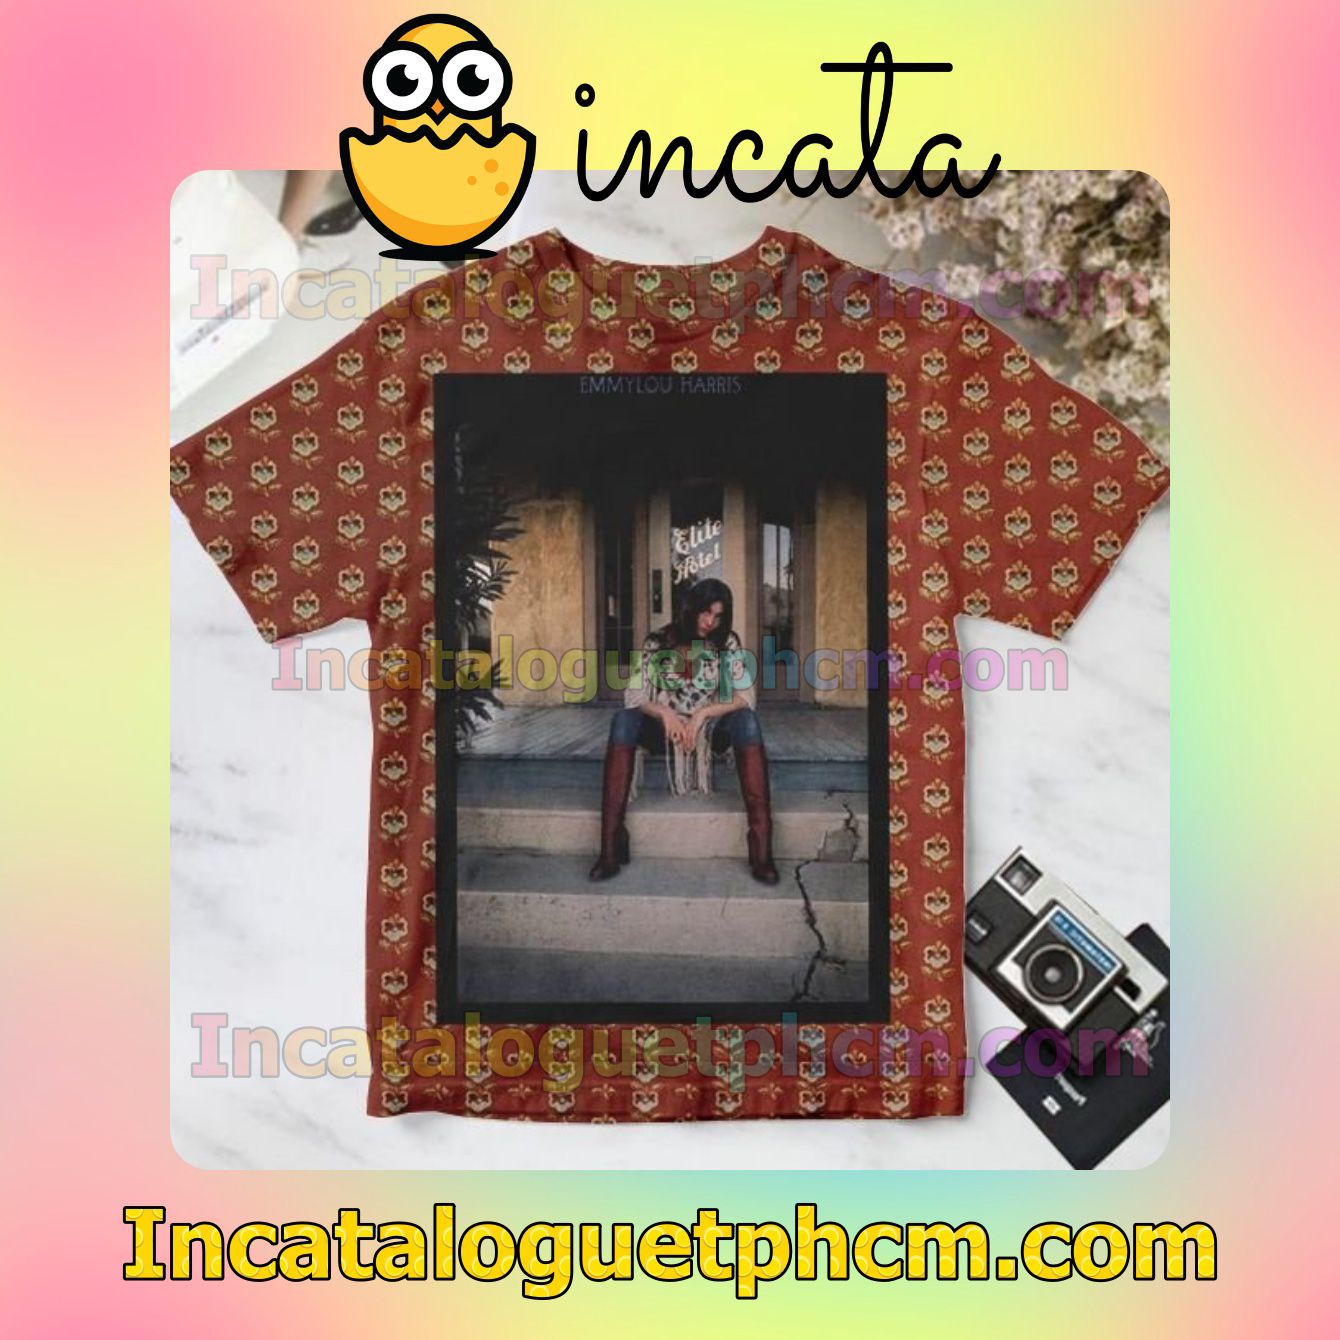 Emmylou Harris Elite Hotel Album Cover Personalized Shirt